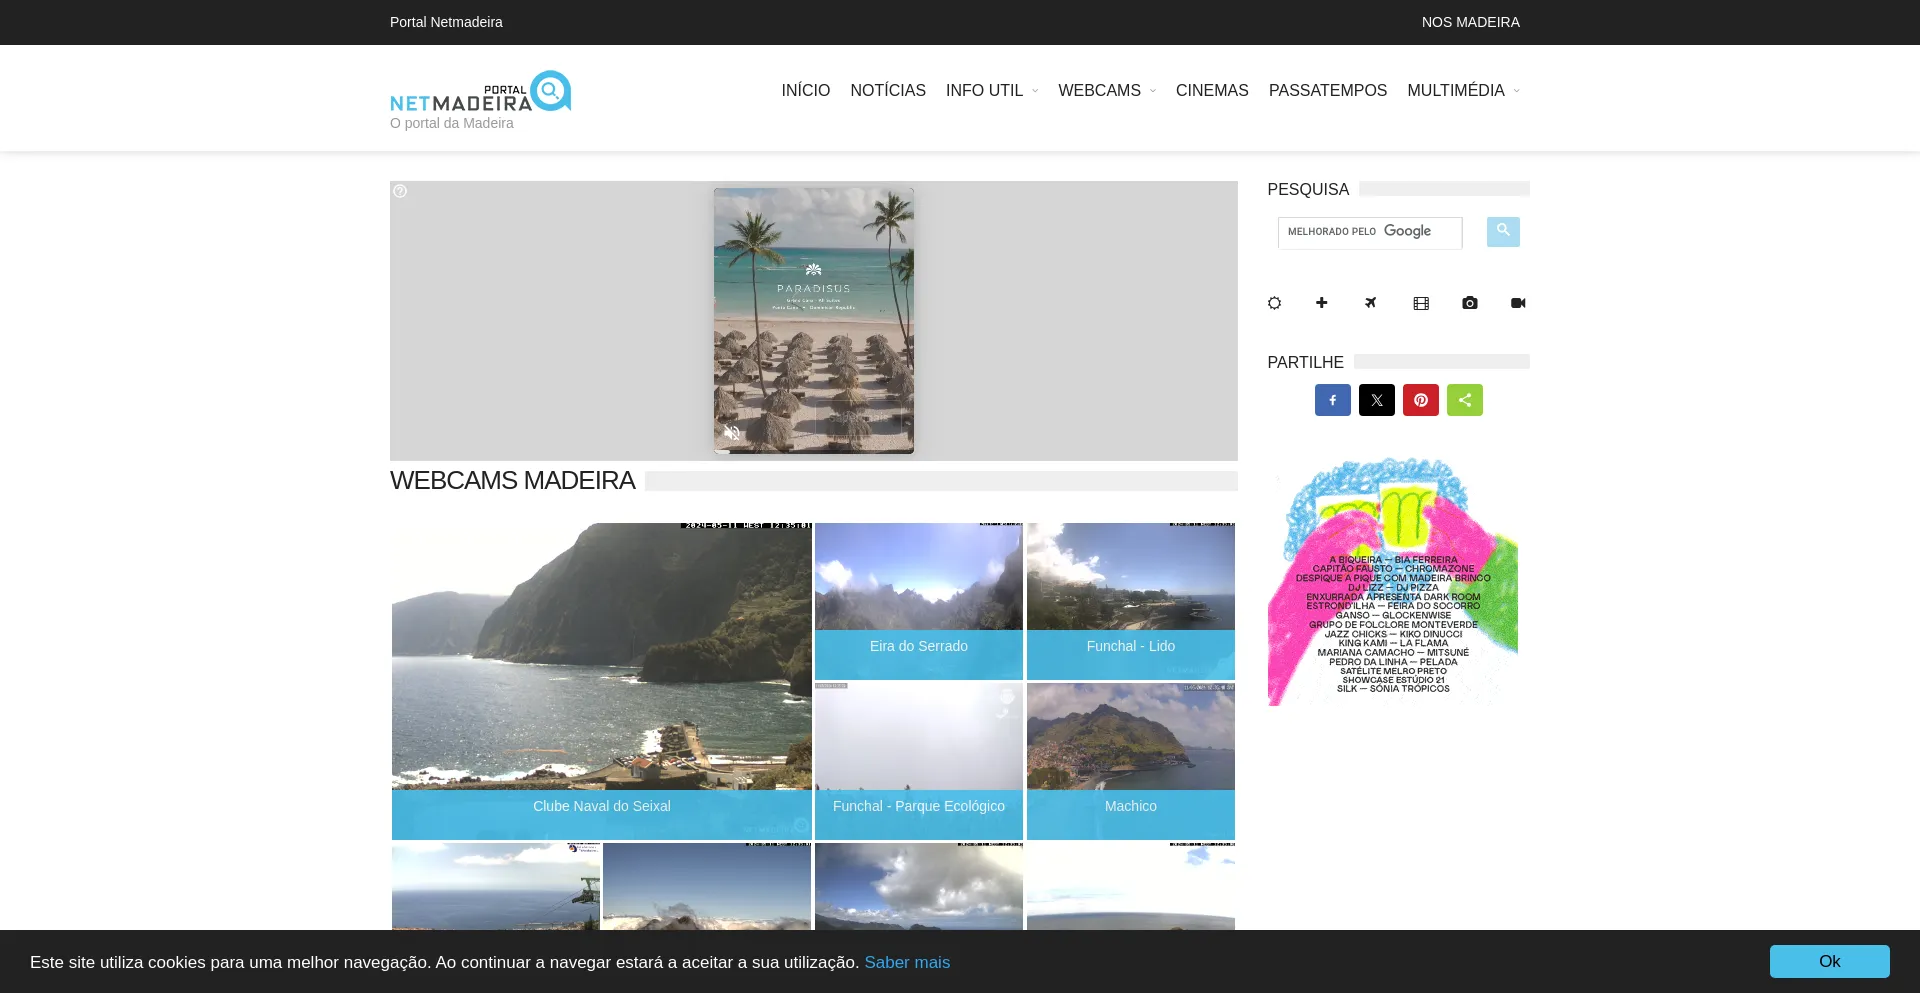 Screenshot of netmadeira.com homepage